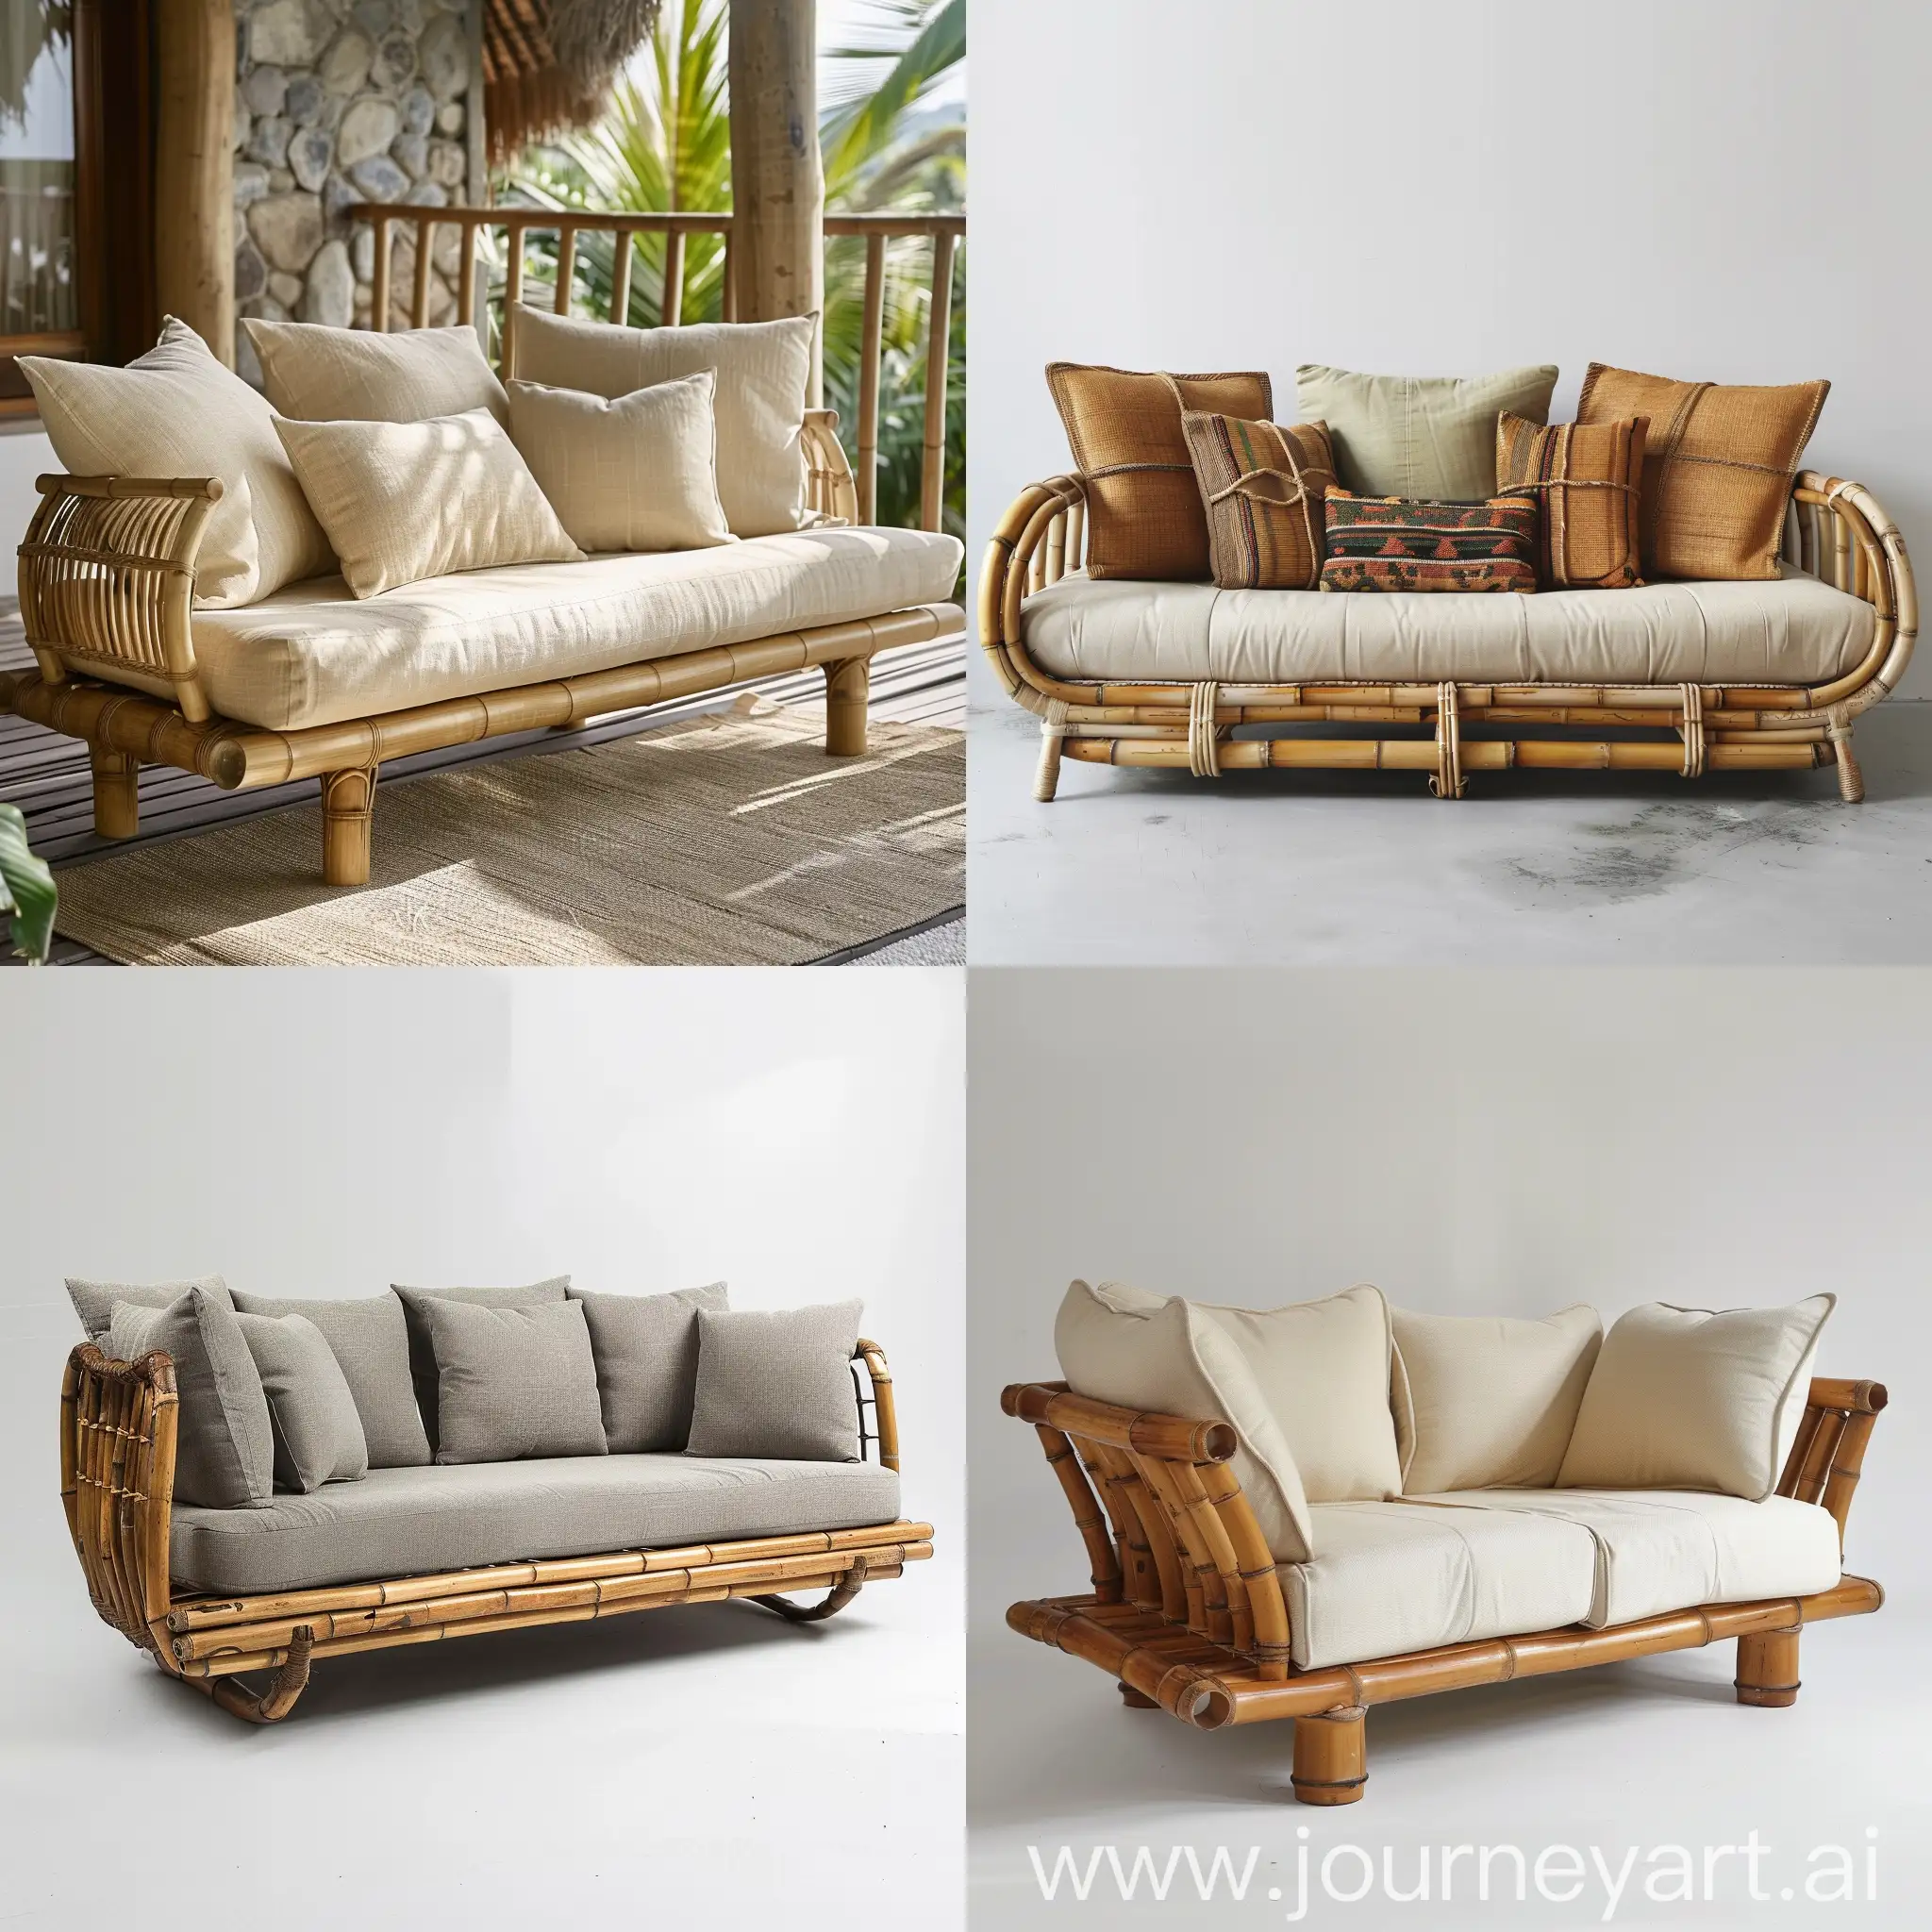 Contemporary-Bamboo-Sofa-Design-with-Versatile-Features